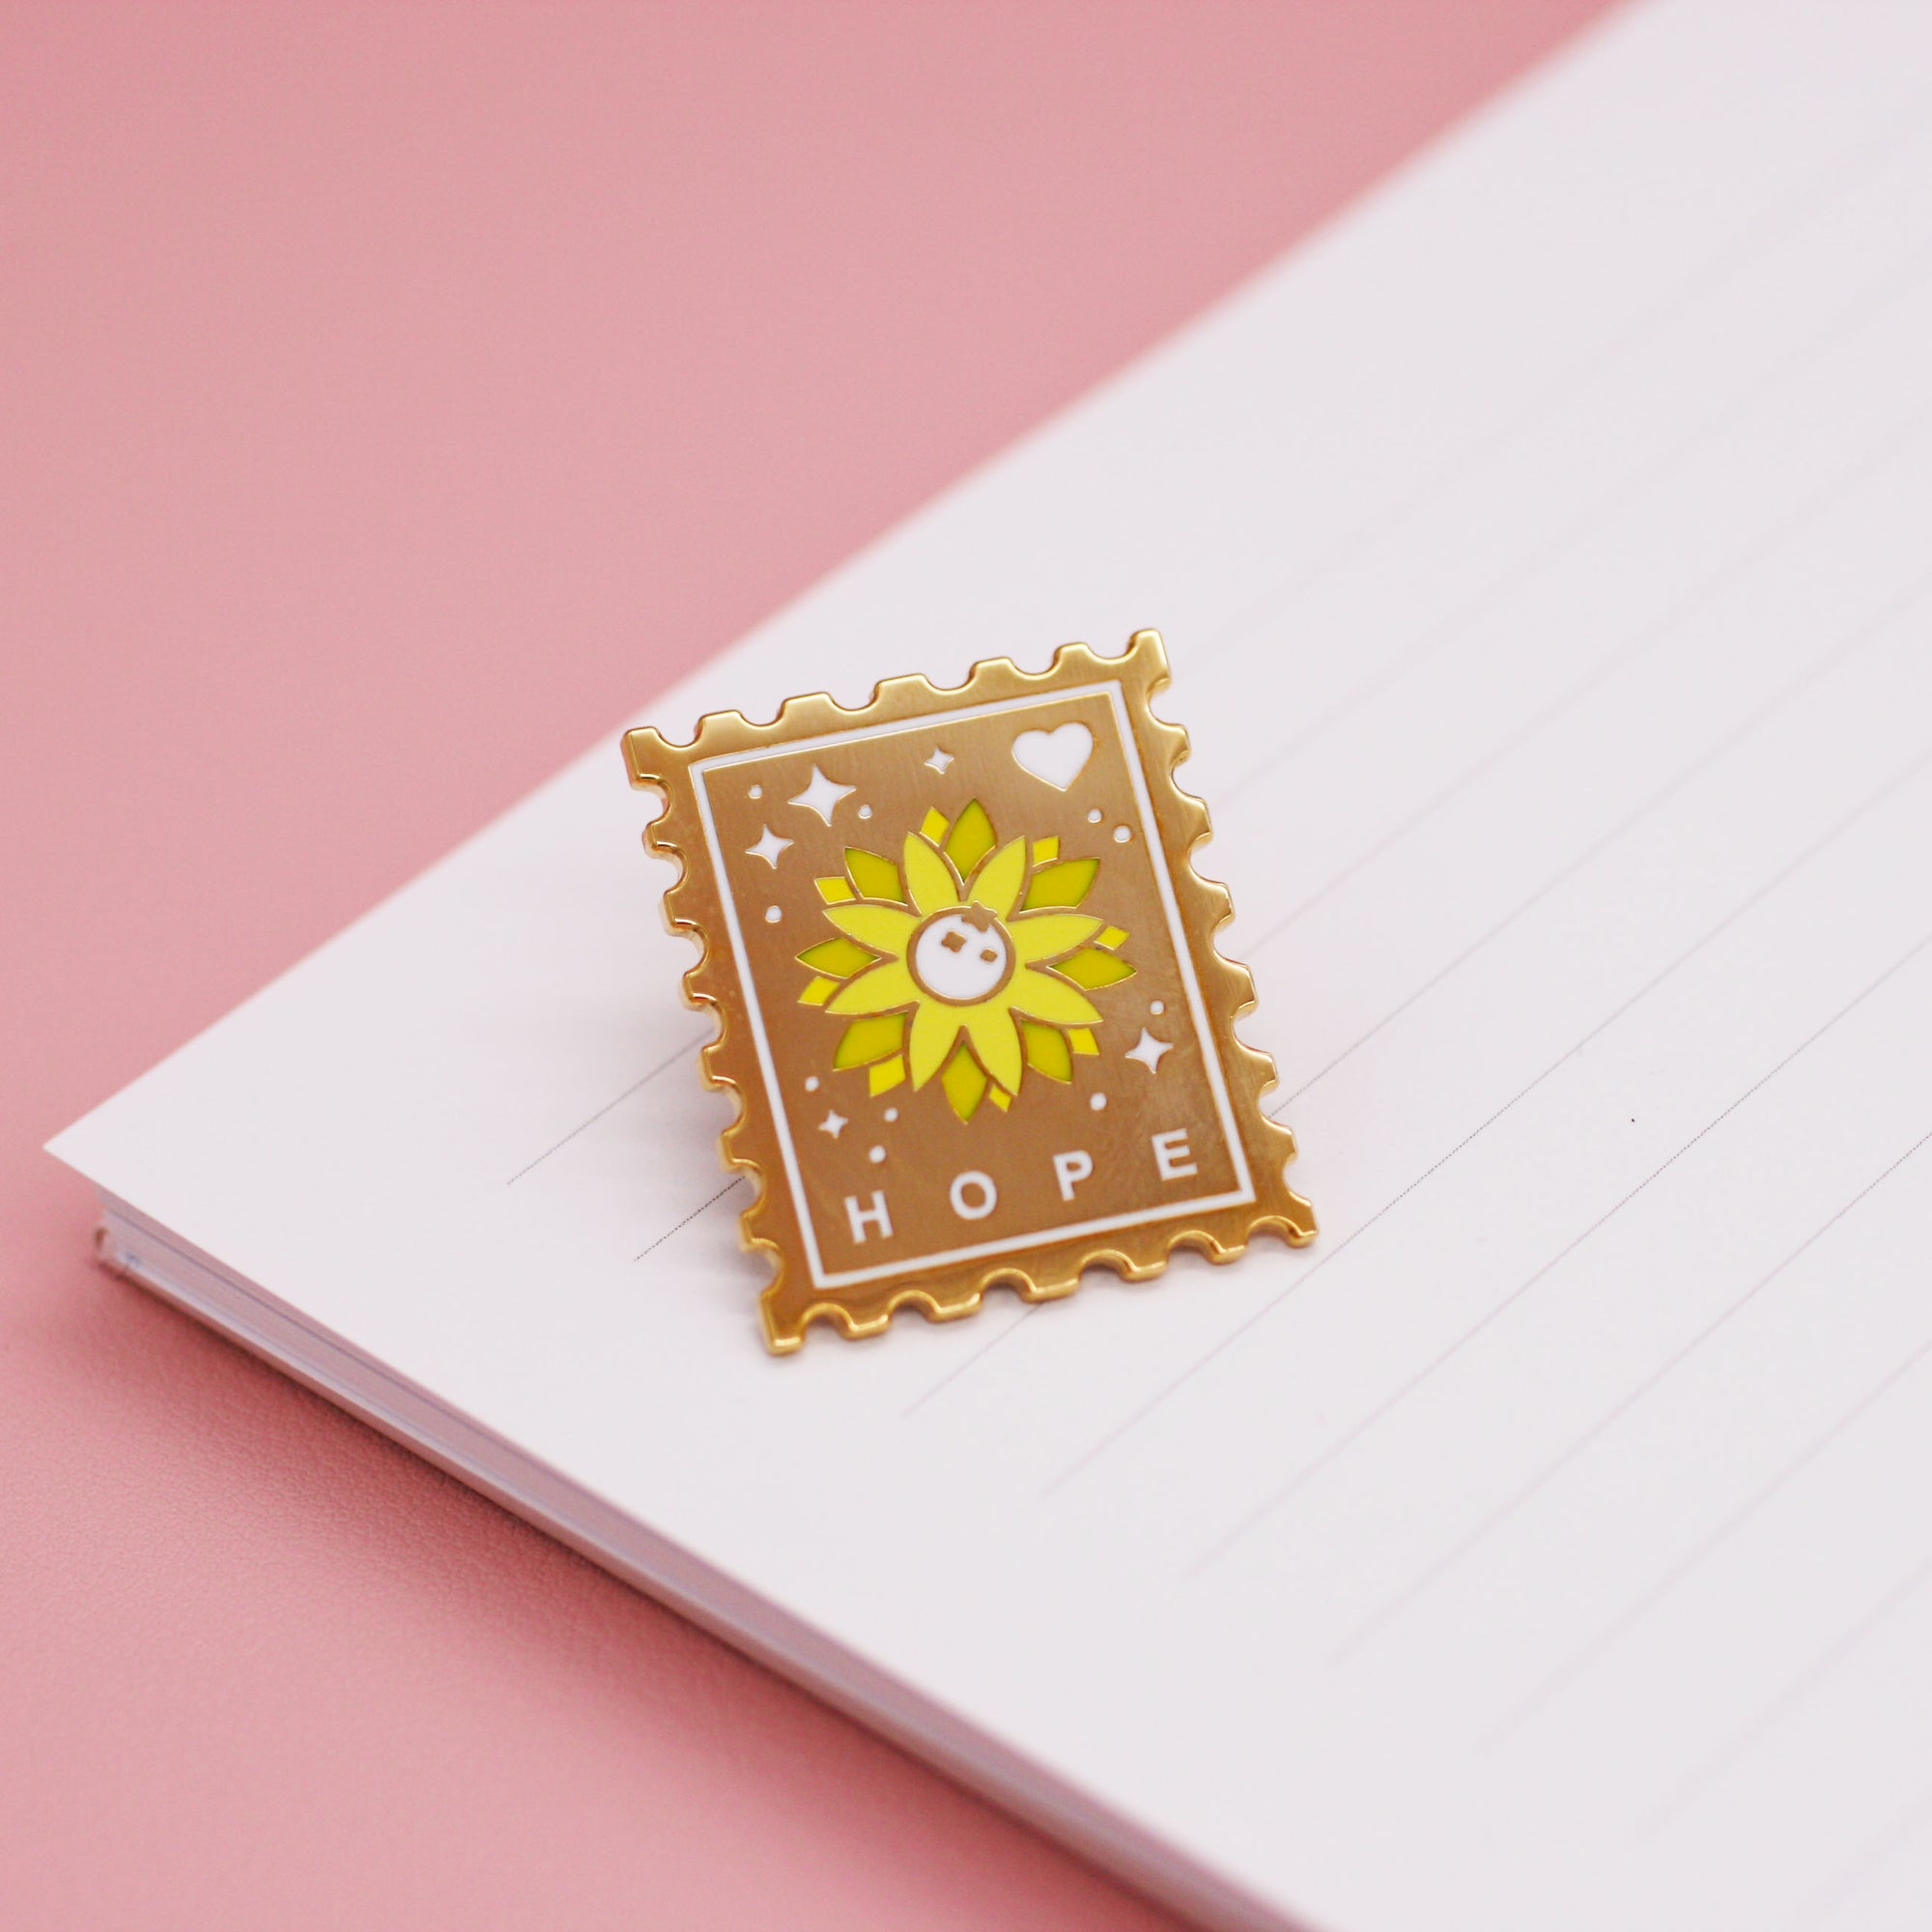 Send Yourself Hope Stamp Enamel Pin